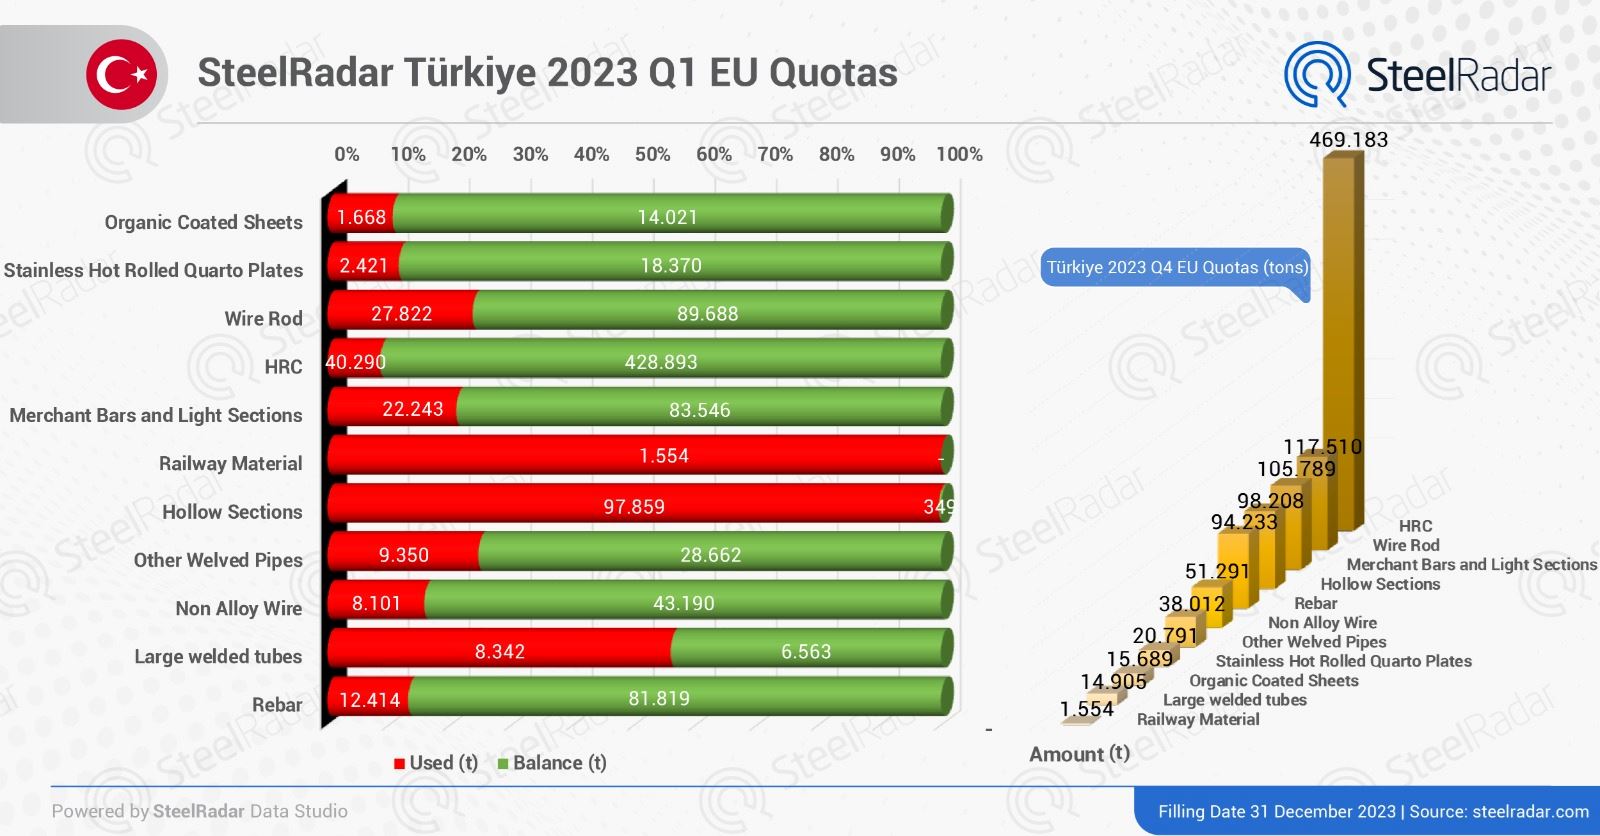 Latest situation in EU steel quota utilisation! The highest demand in Türkiye is for railway materials